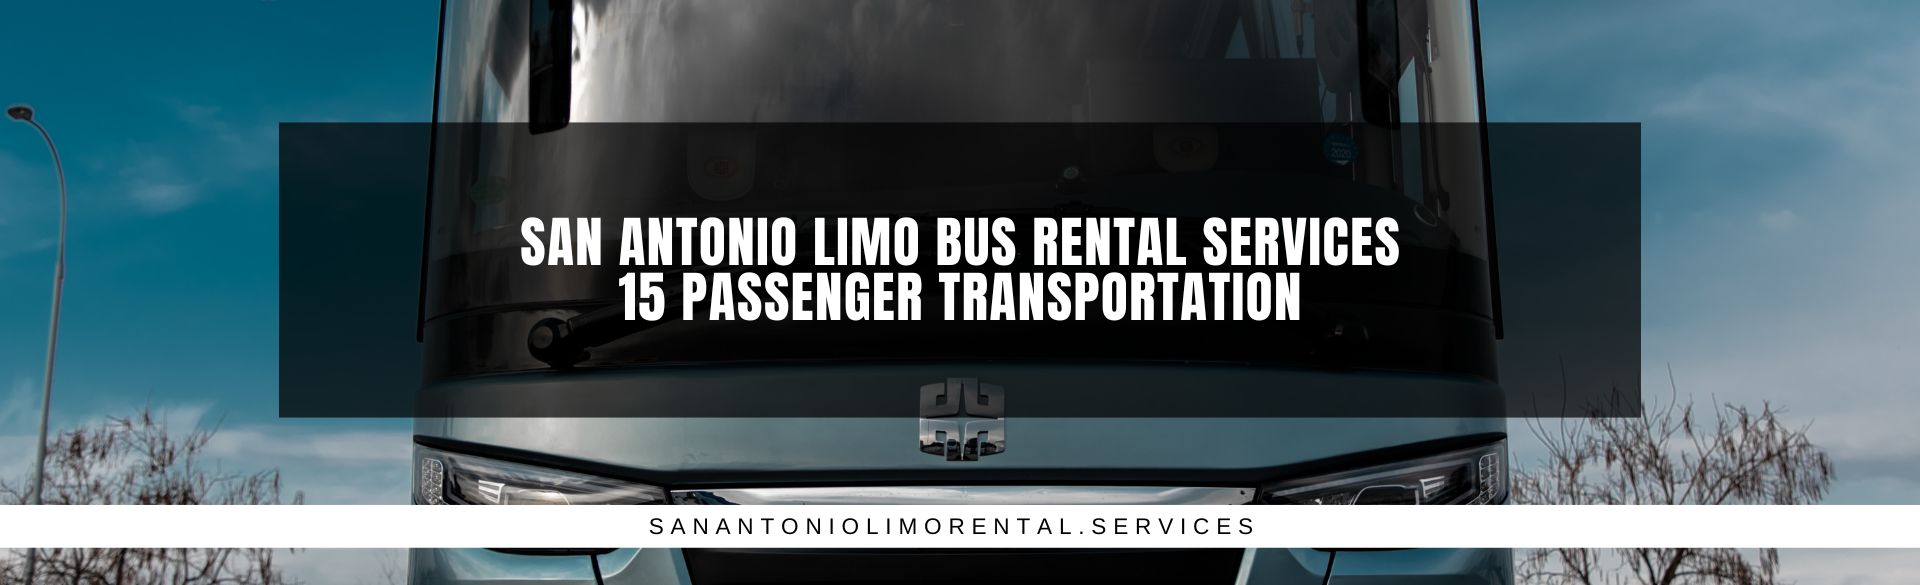 San Antonio Limo Bus Rental Services 15 passenger Transportation